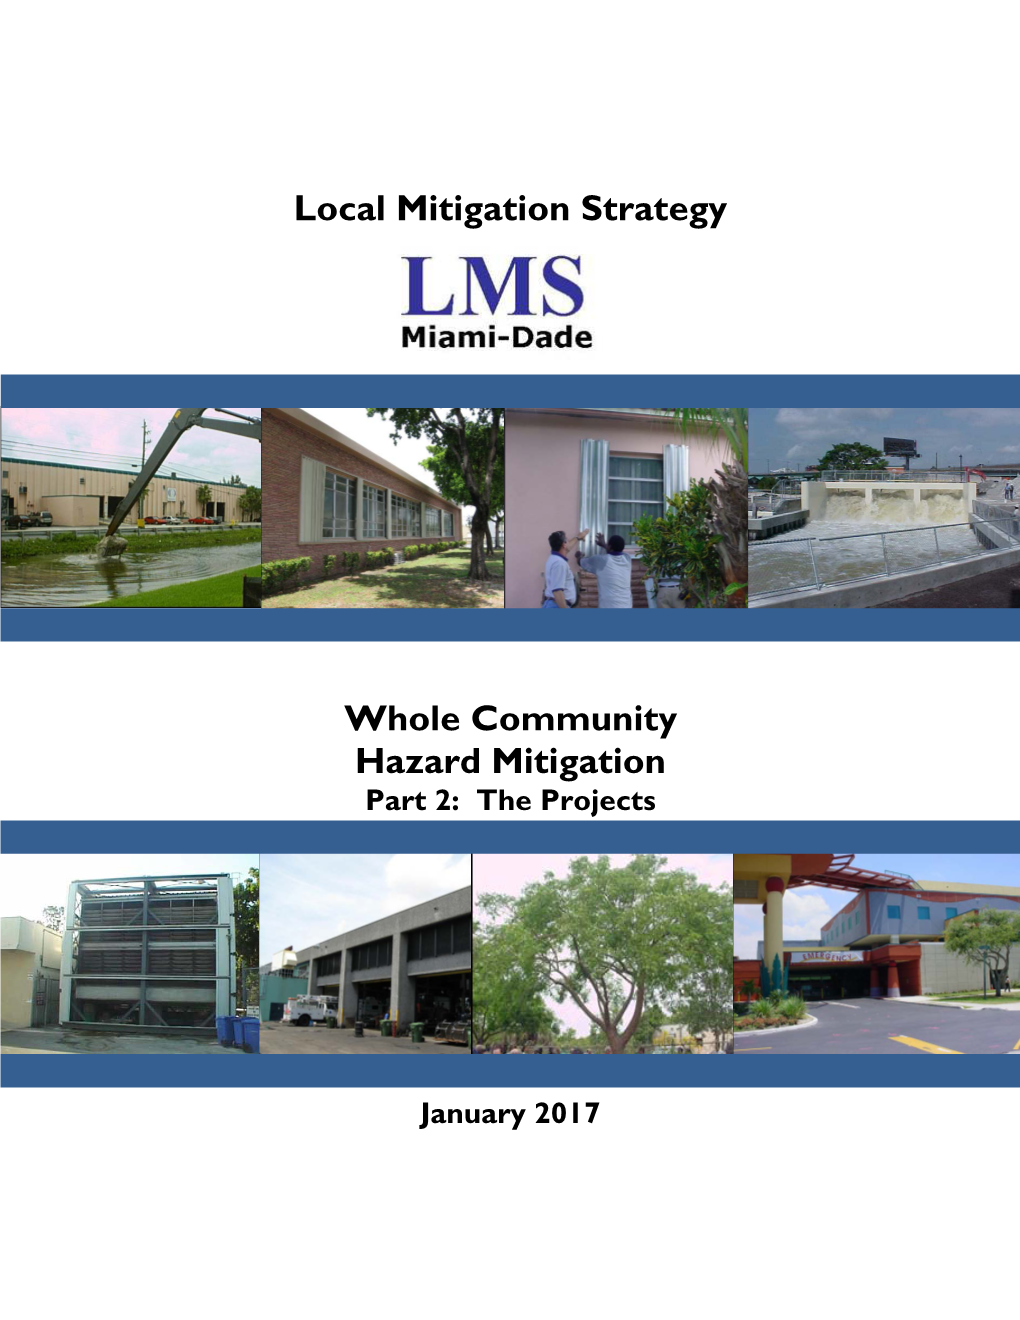 Local Mitigation Strategy Whole Community Hazard Mitigation